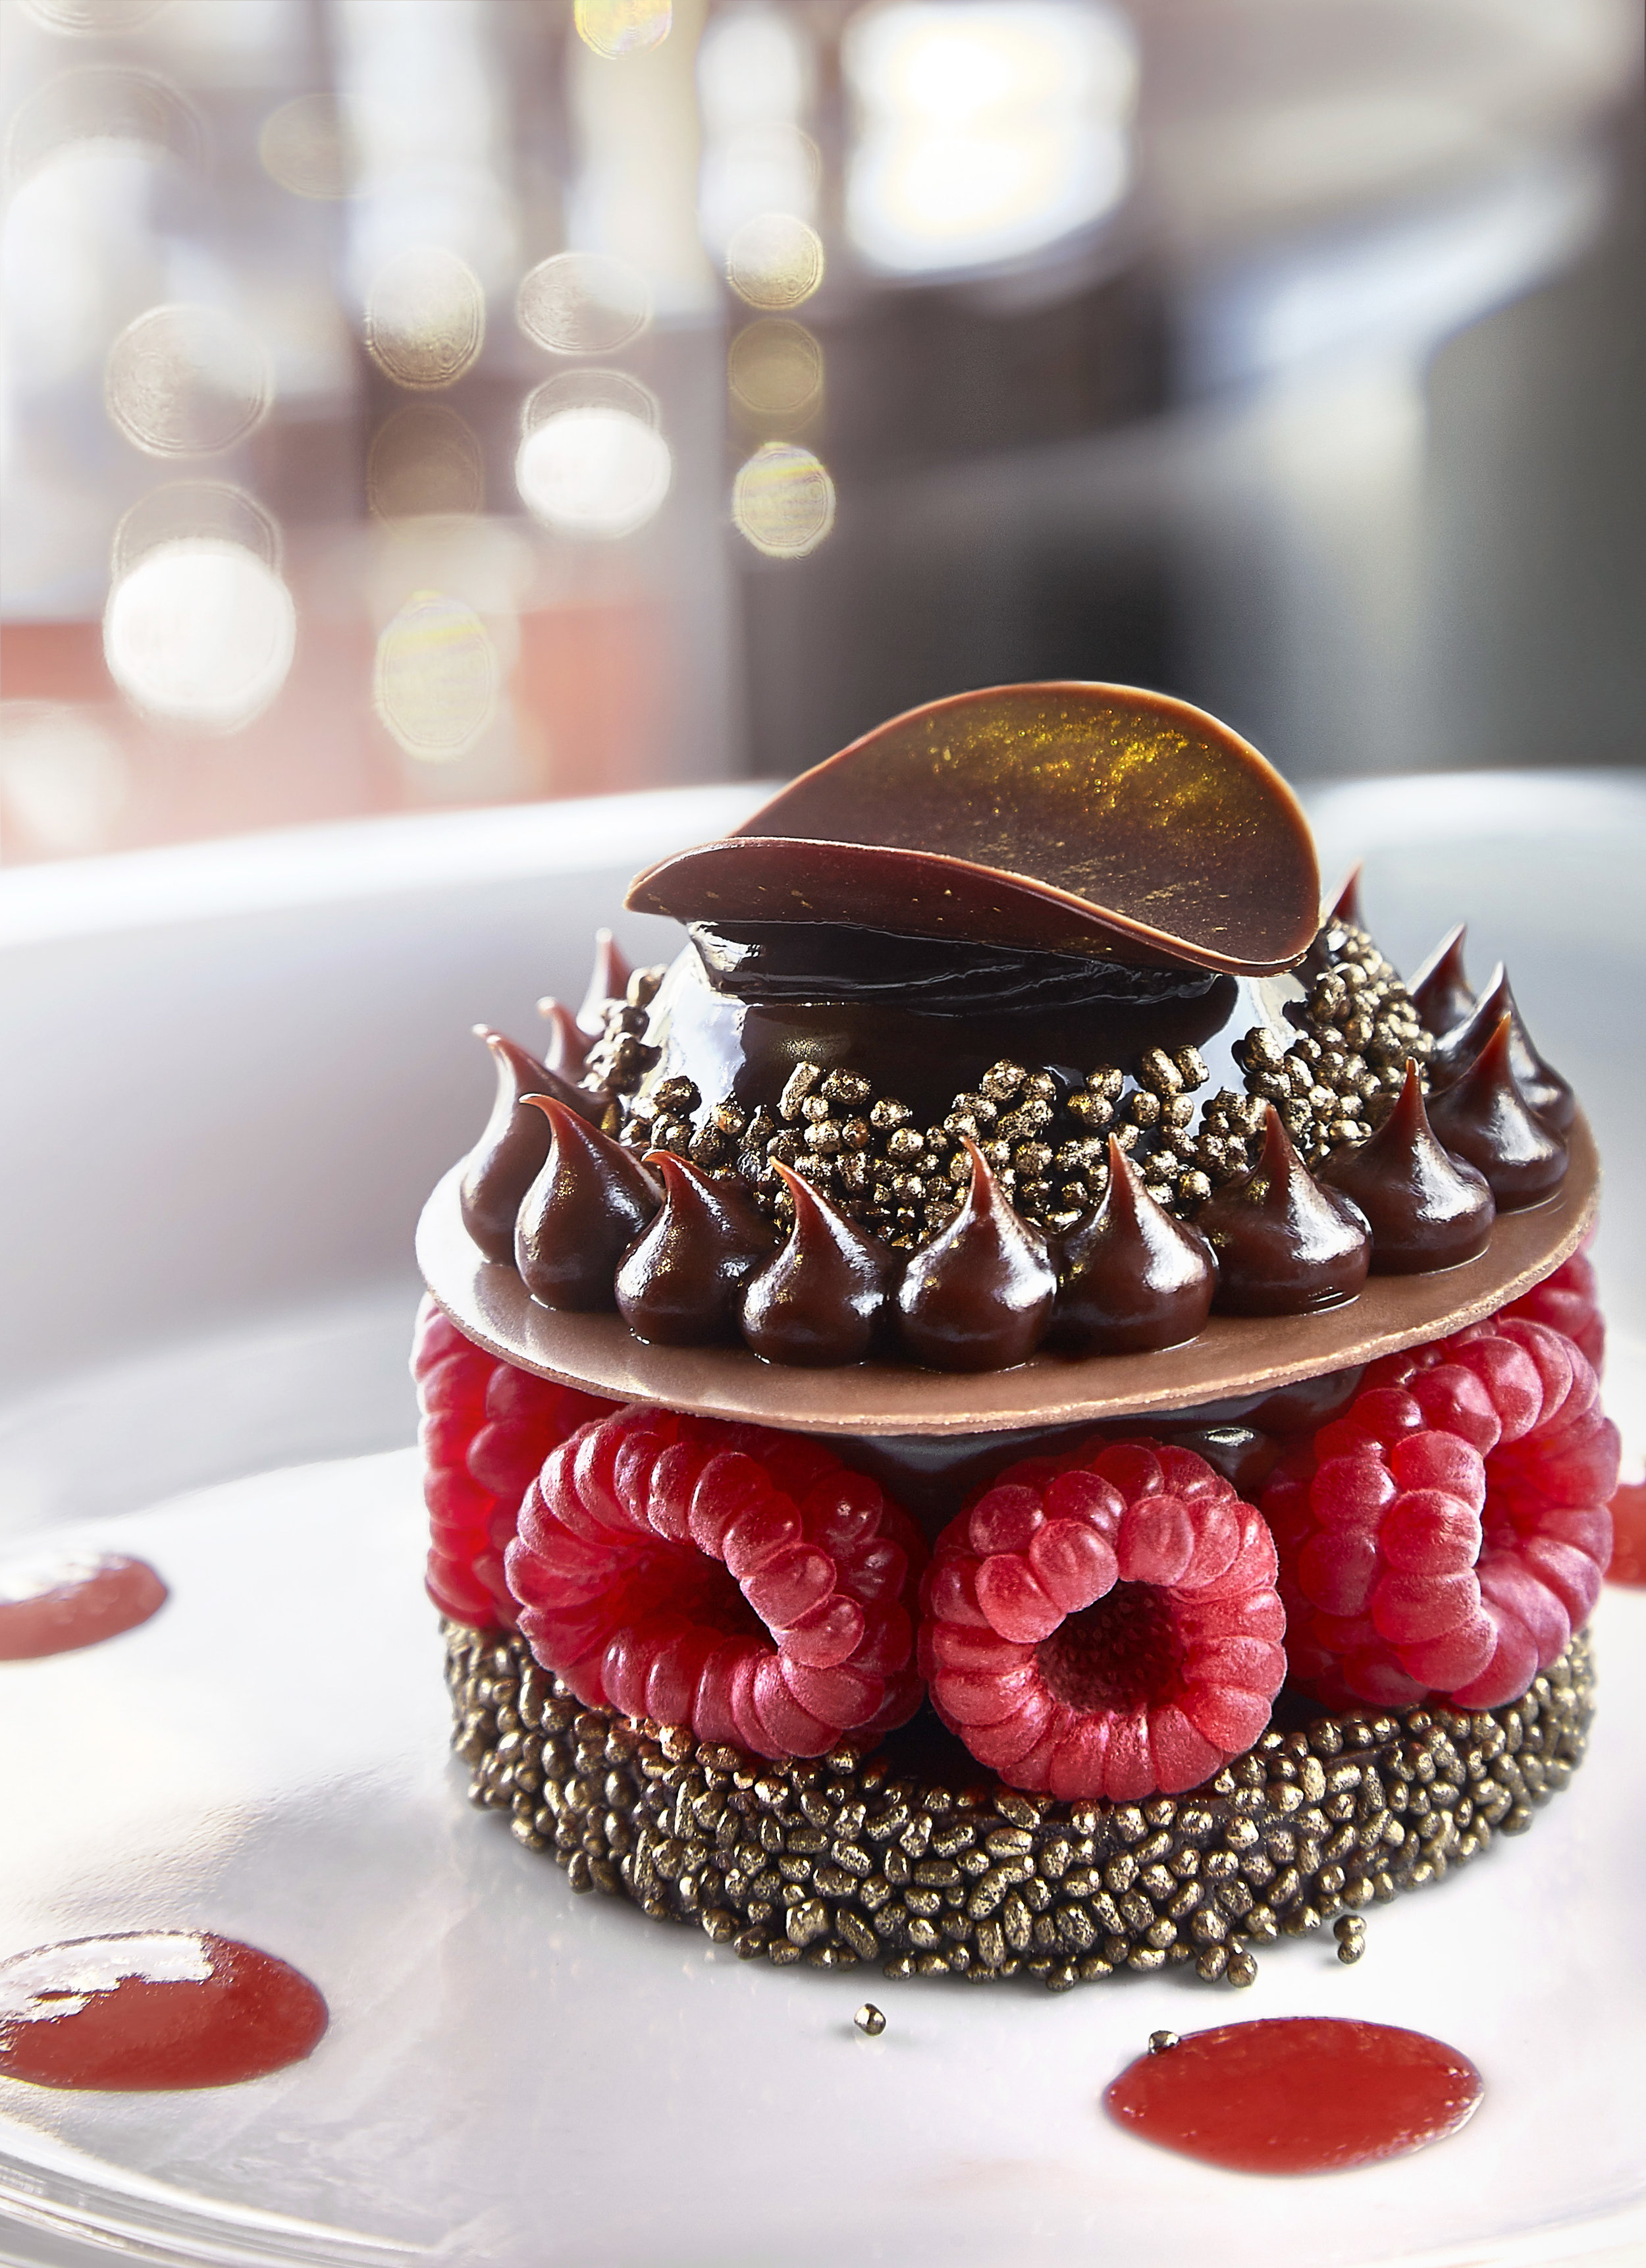 Cosmopolitan_Flourless_Chocolate_Cake.jpg